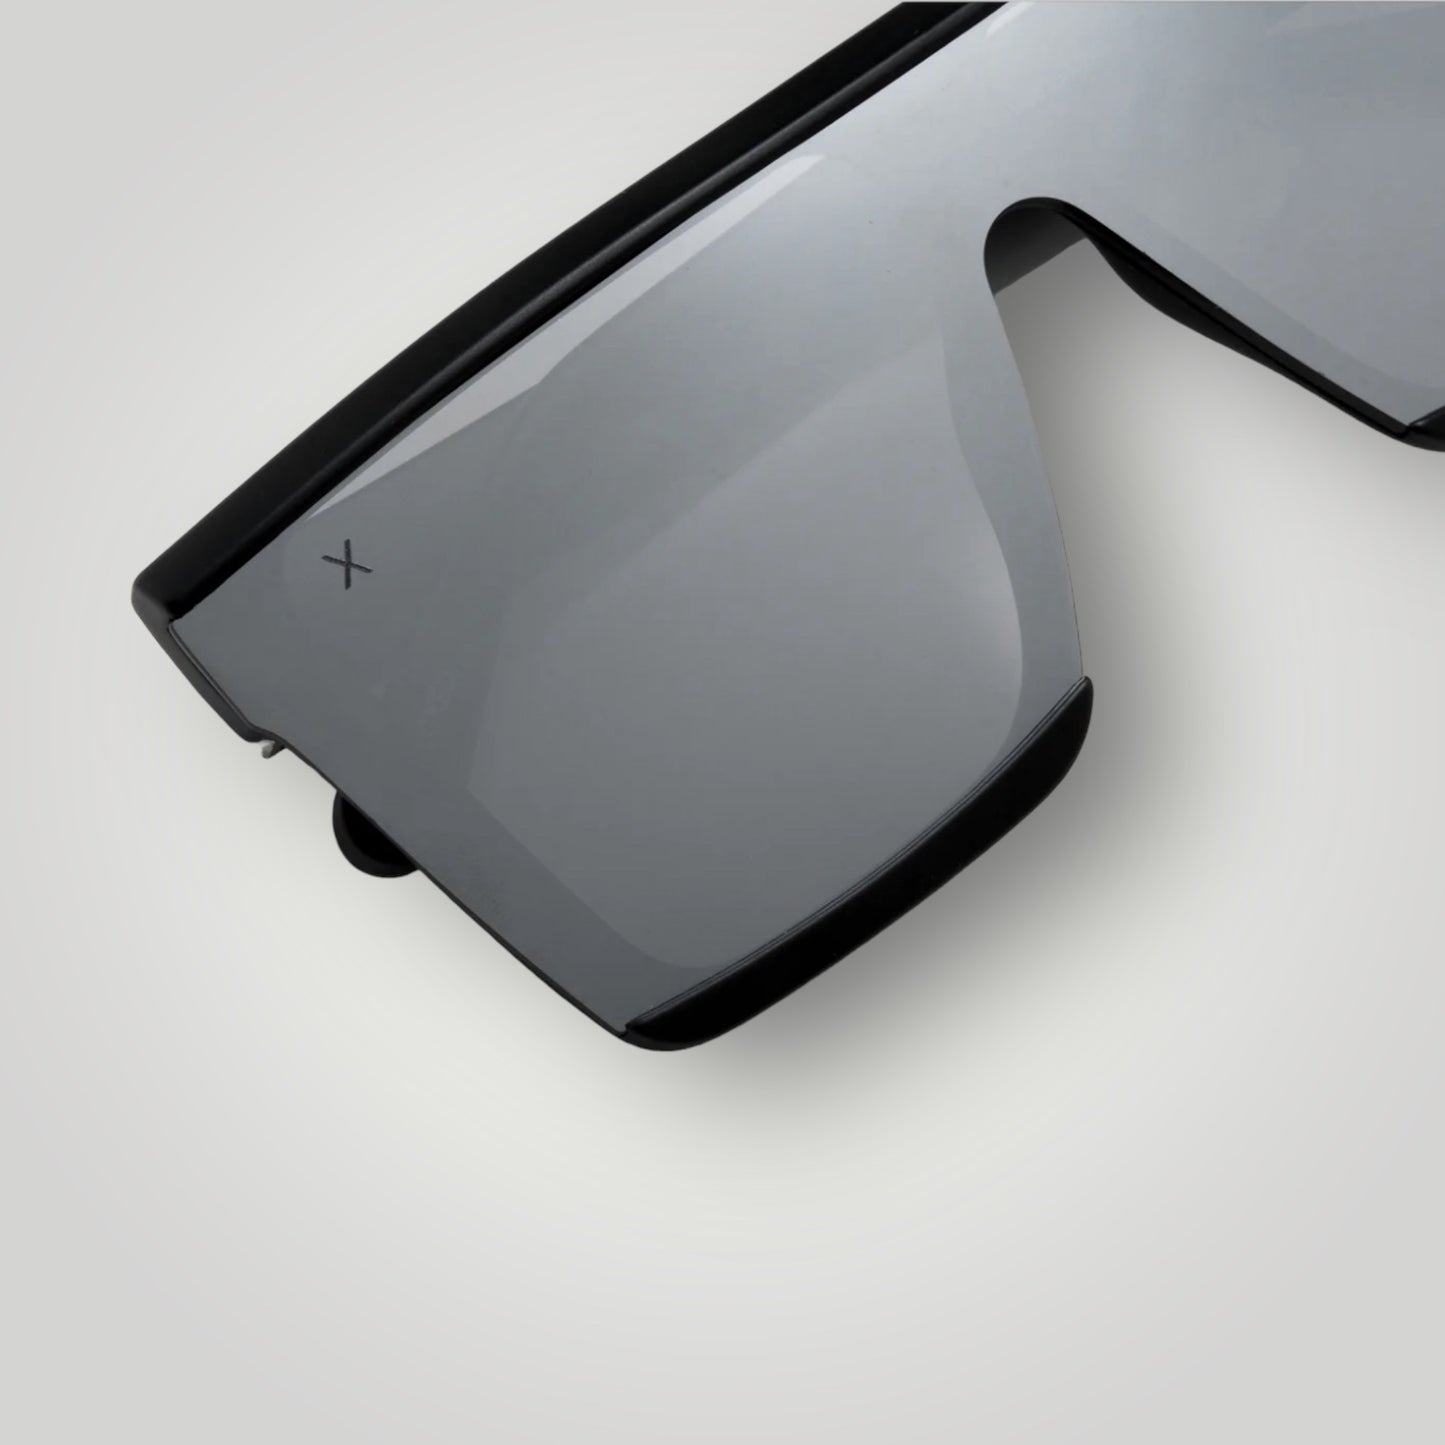 Unlocked Sunglasses: matte black + grey mirror